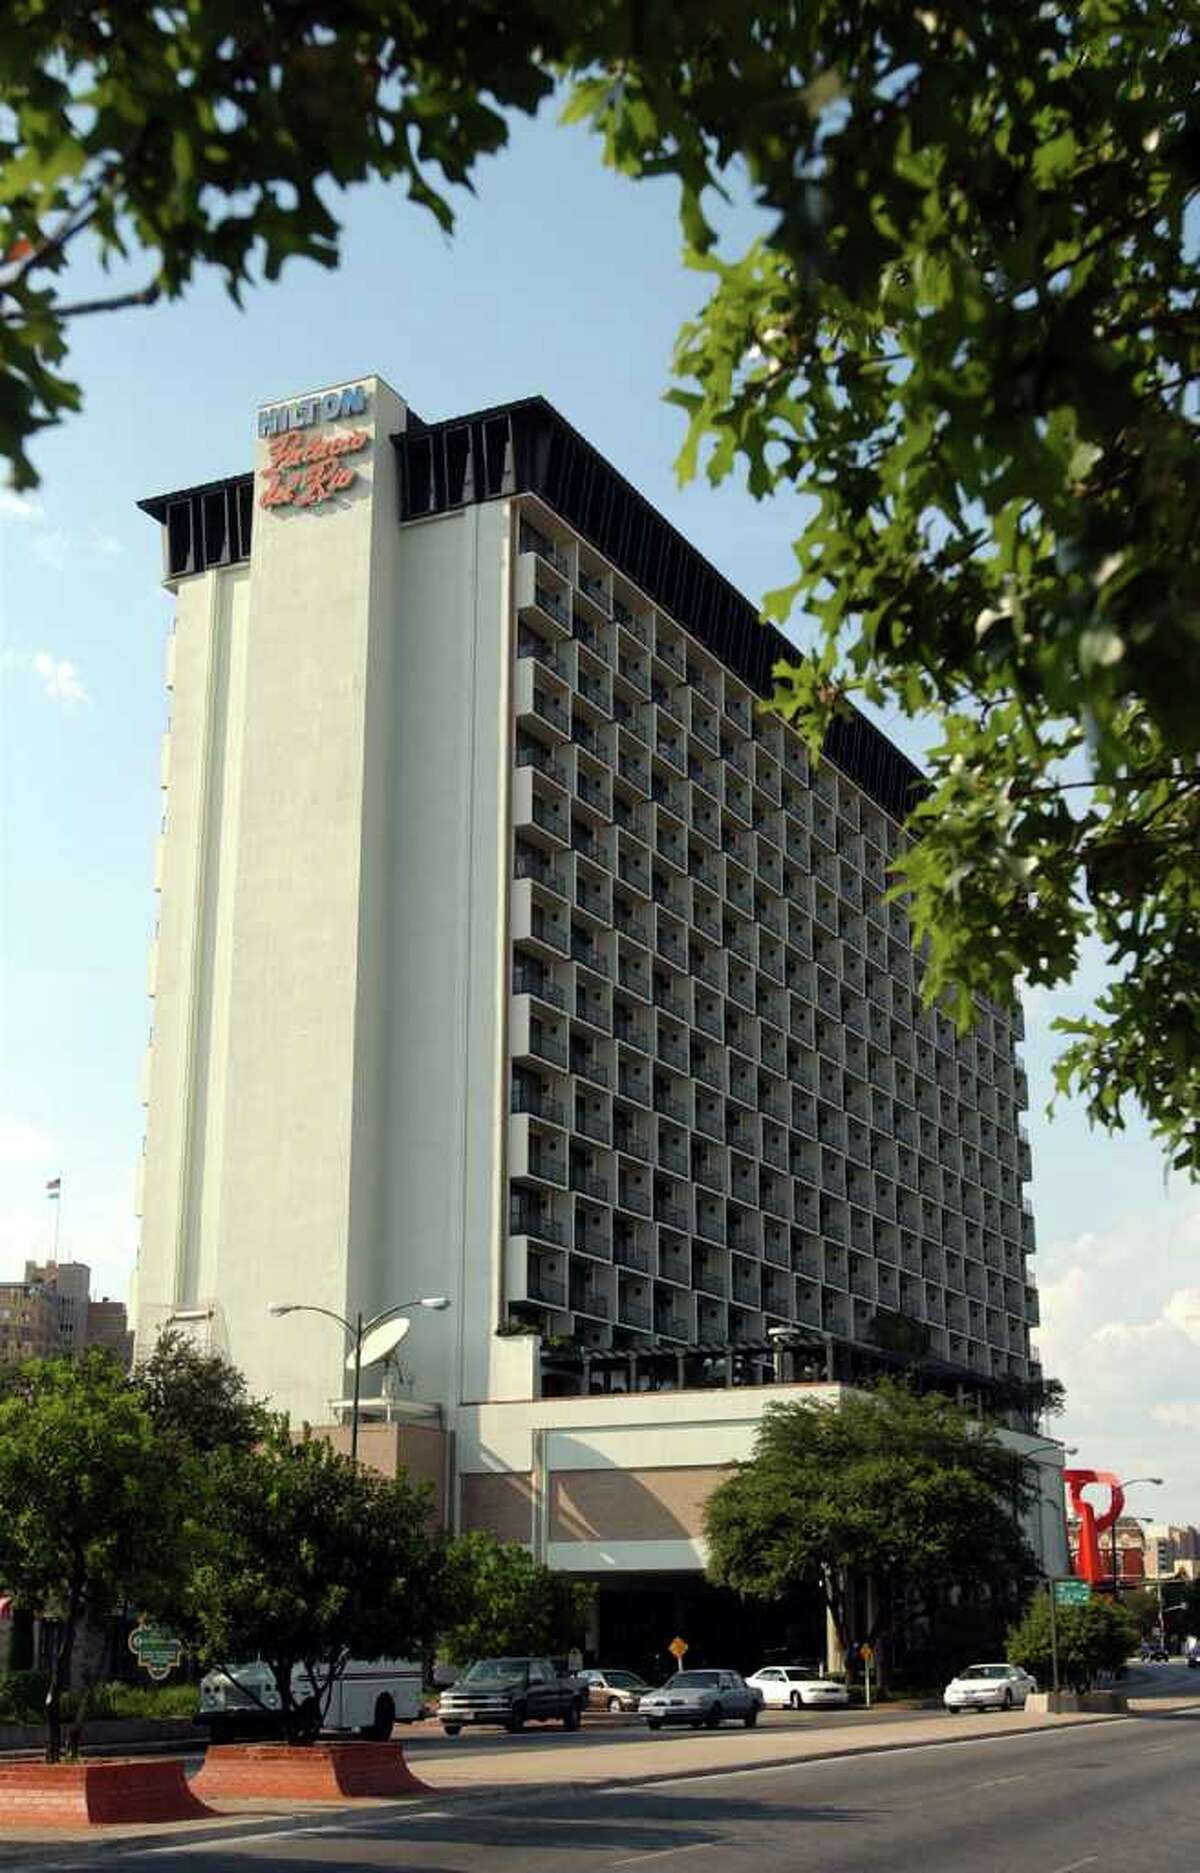 Photo of the Hilton Palacio Del Rio on Wednesday, August 7, 2002.